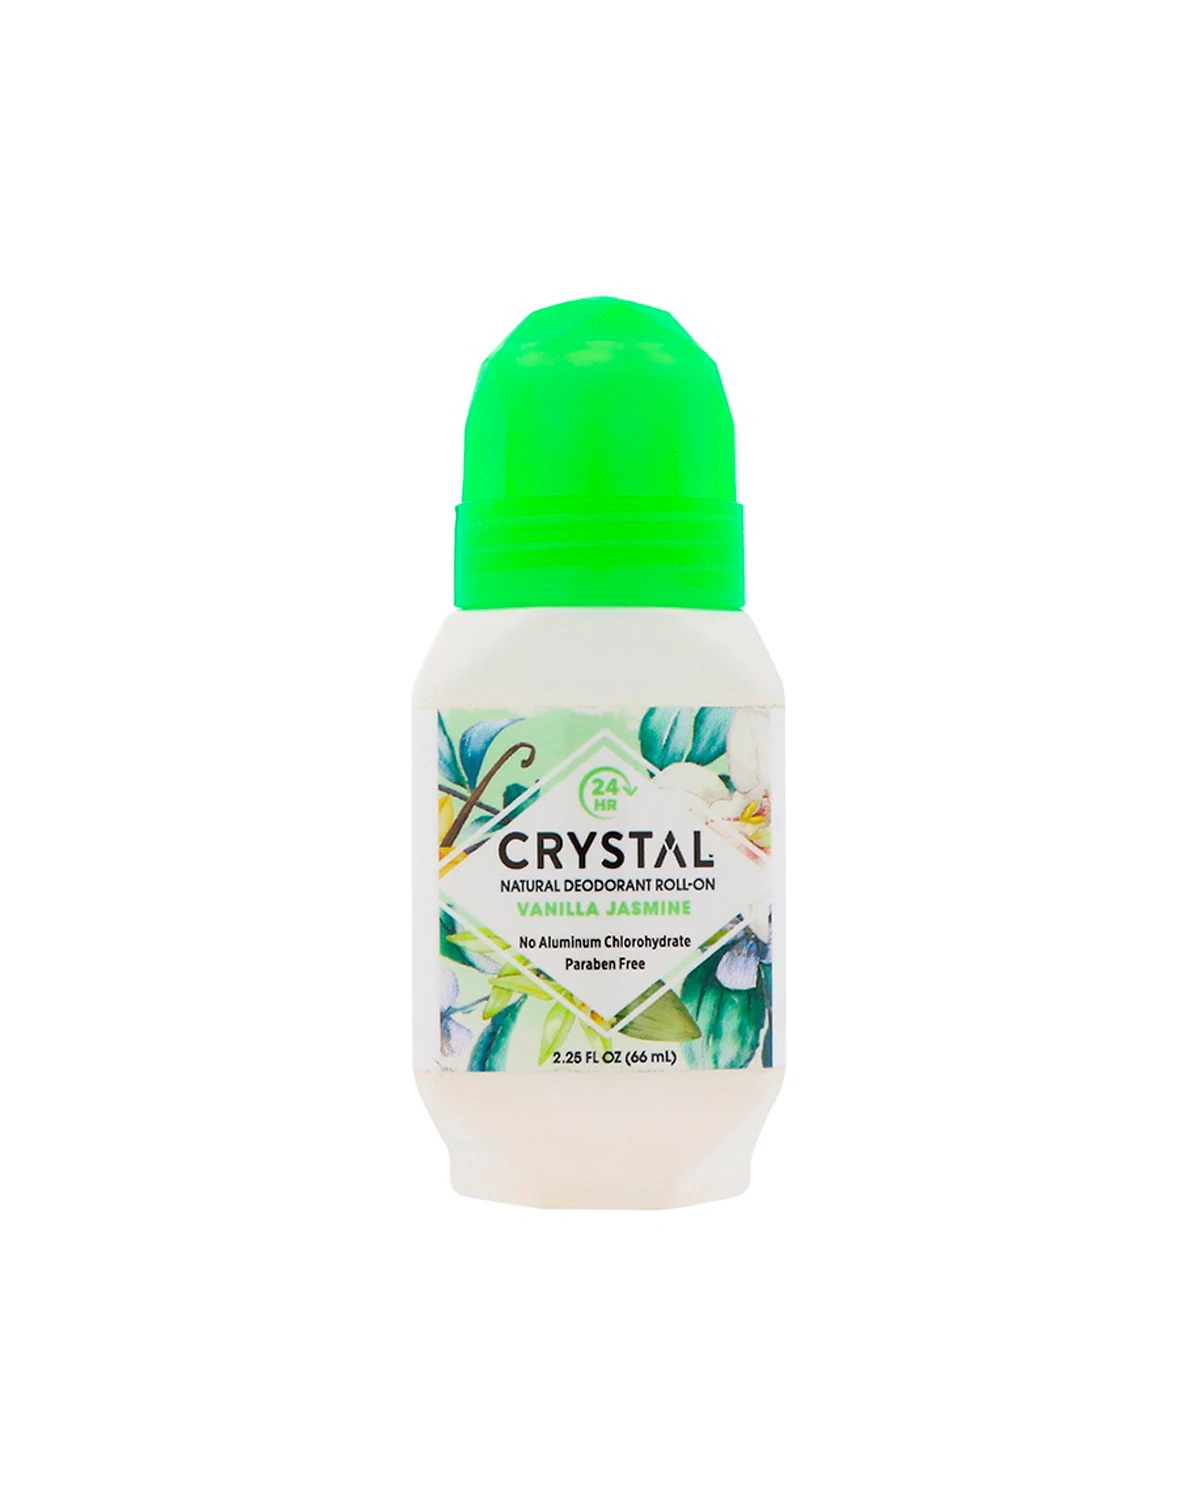 Шариковый дезодорант с ароматом ванили и жасмина | 66 мл Crystal Body Deodorant 20200626